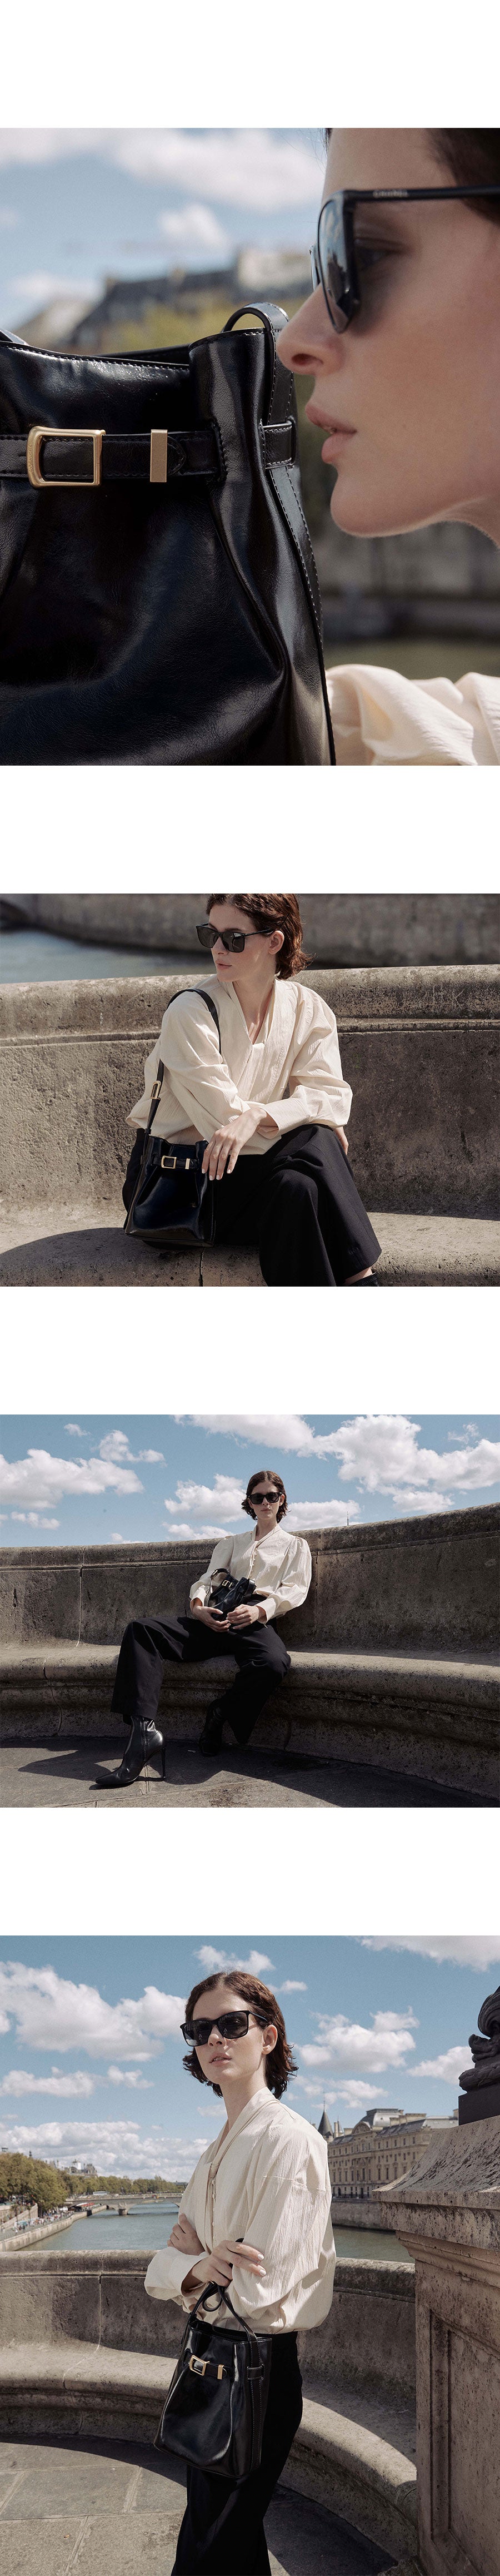 LOEUVRE Sac de Ceinture Small Noir empresskorea Timeless Elegance: Louevre Handbag 23AW Collection Inspired by History: The L...